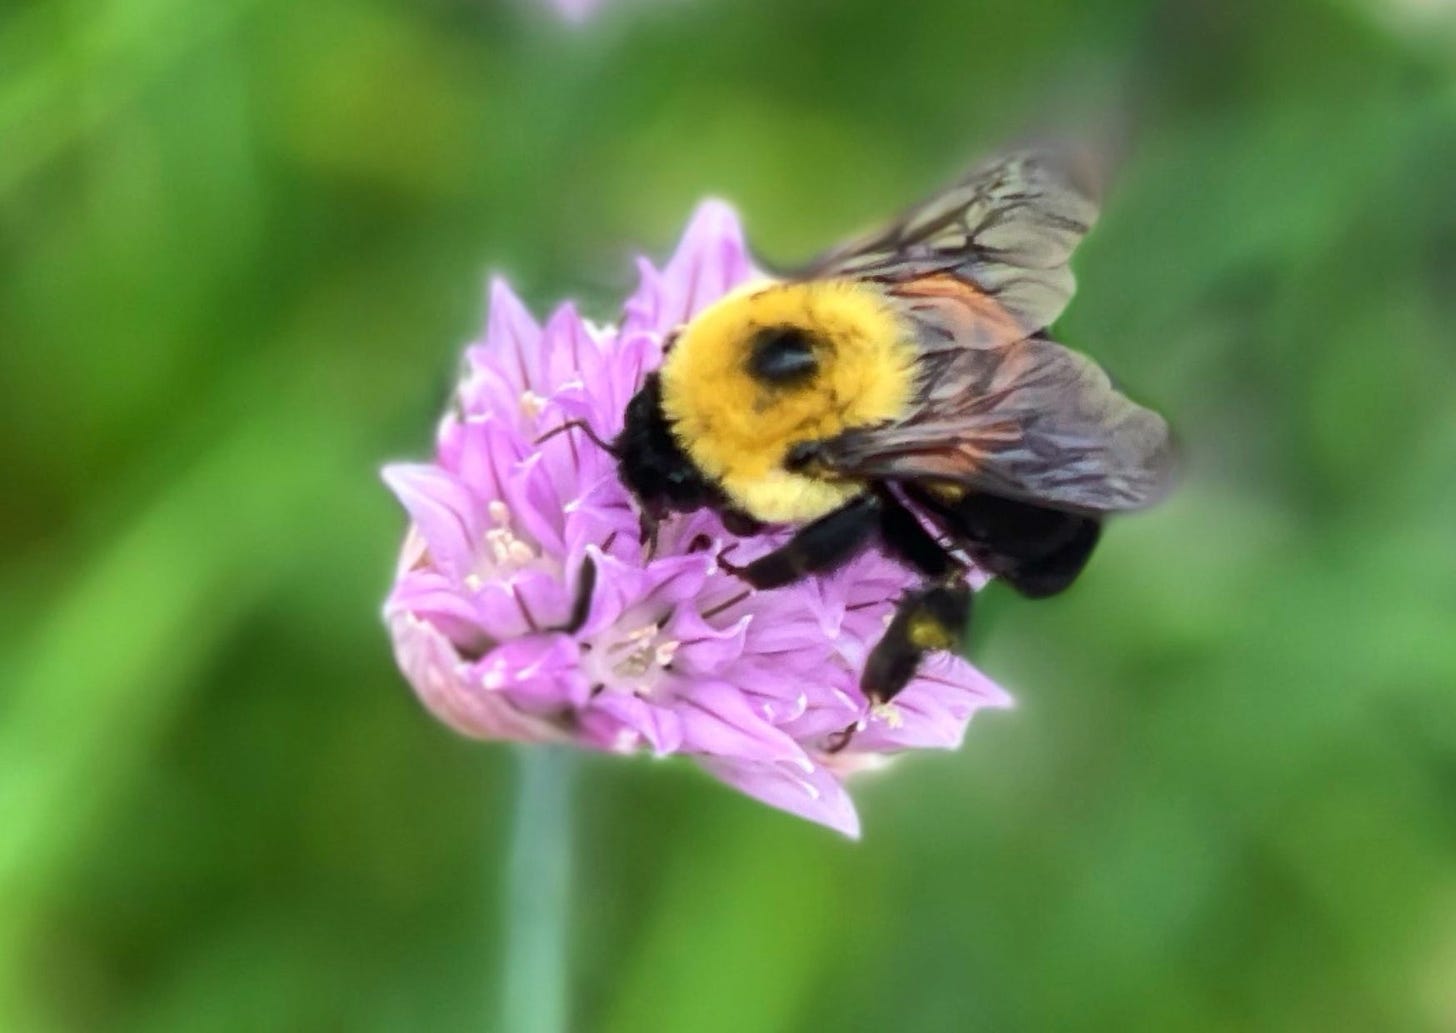 A bumblebee on a light purple flower